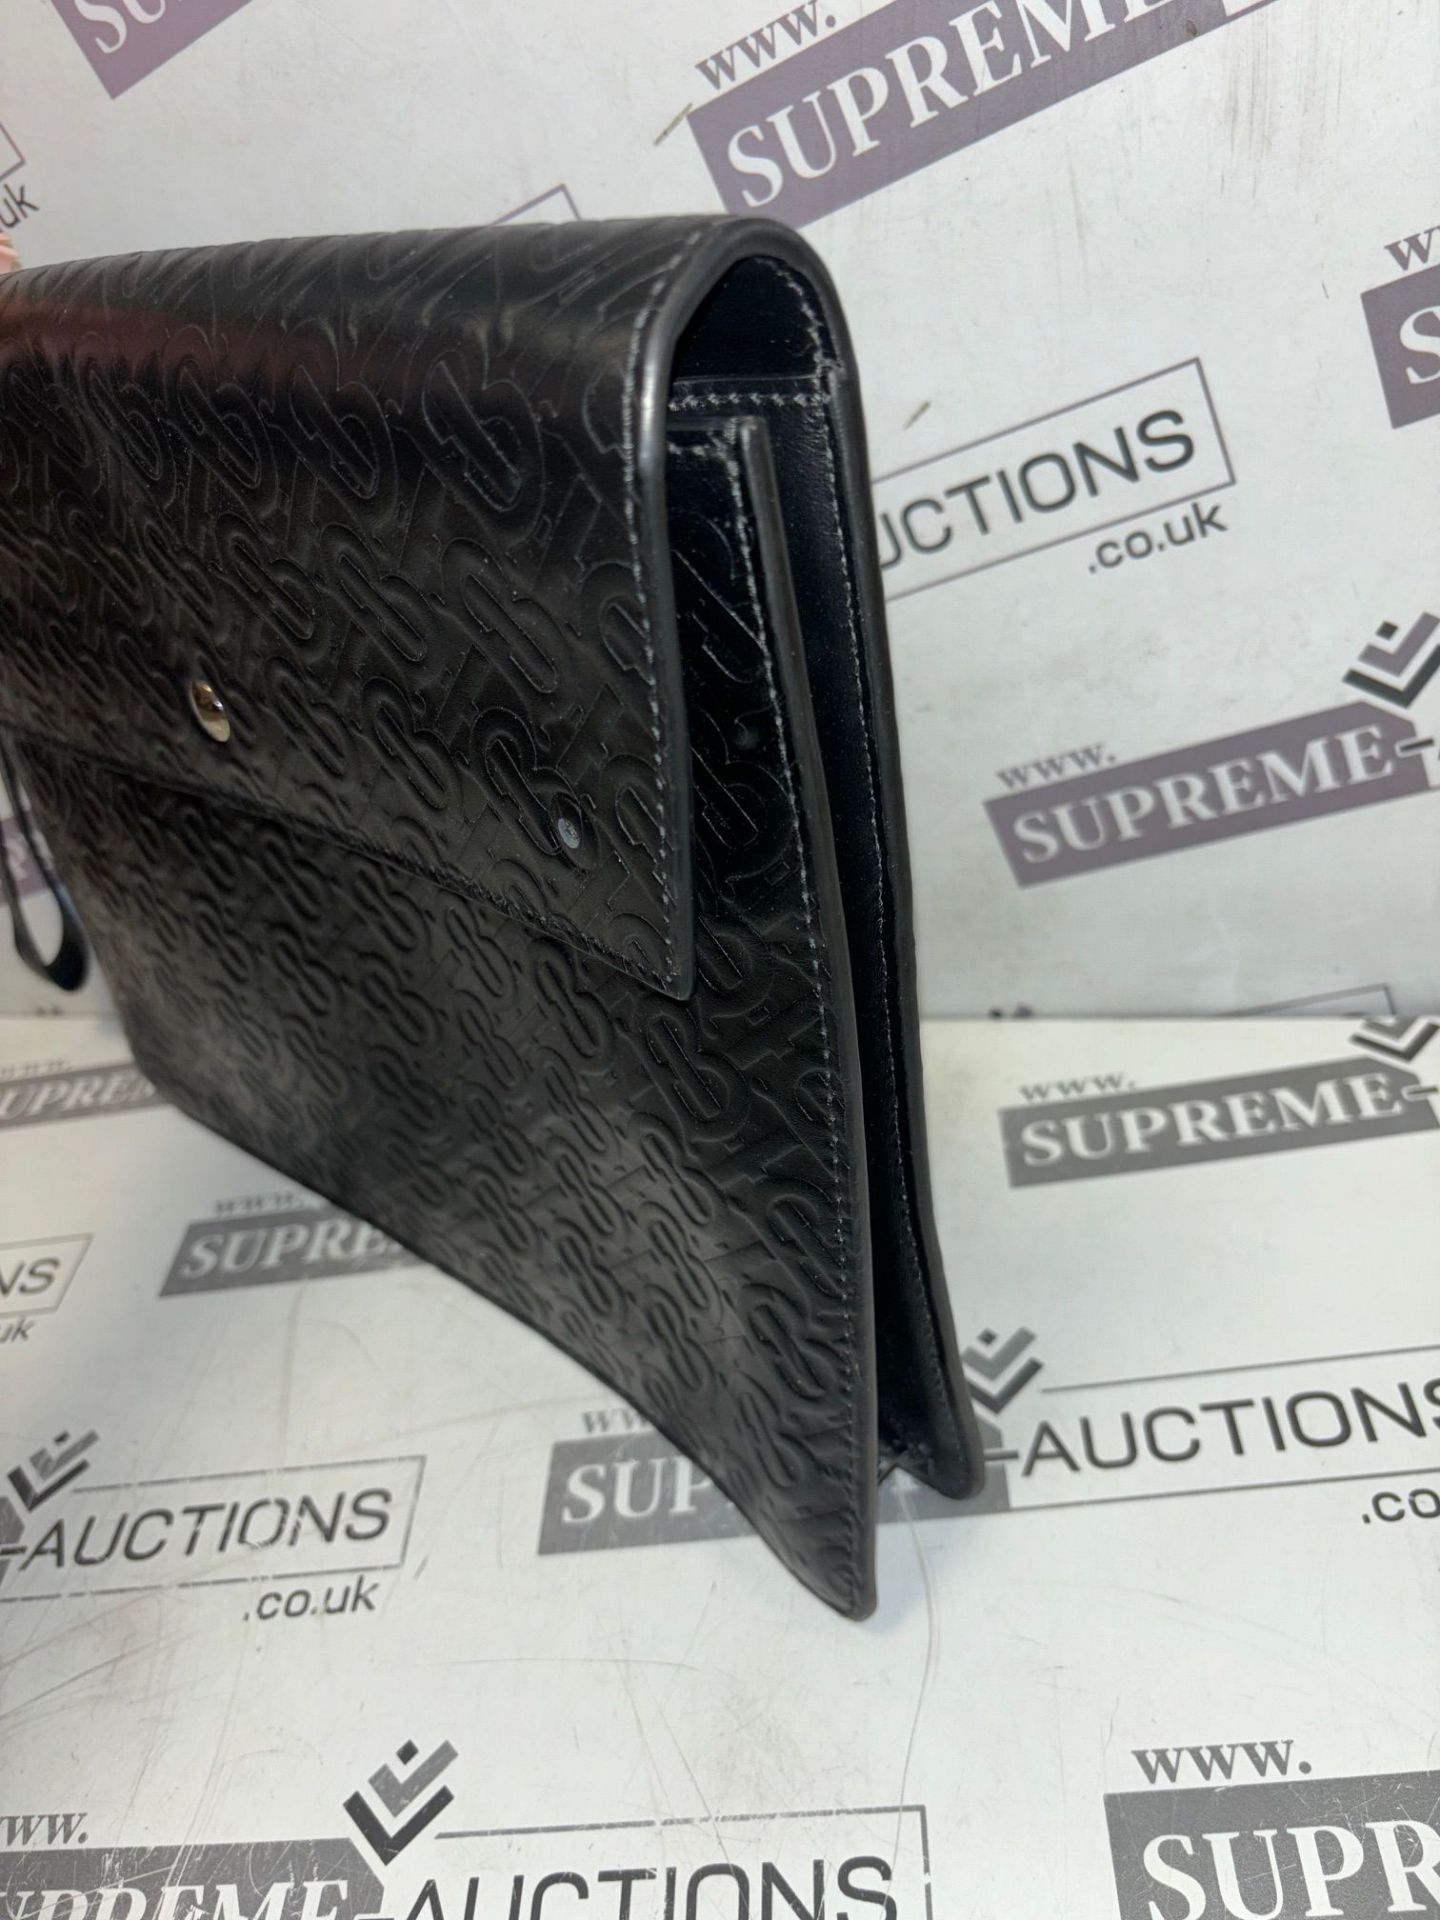 Genuine Burberry TB envelope Black Leather Clutch Bag - Image 3 of 7